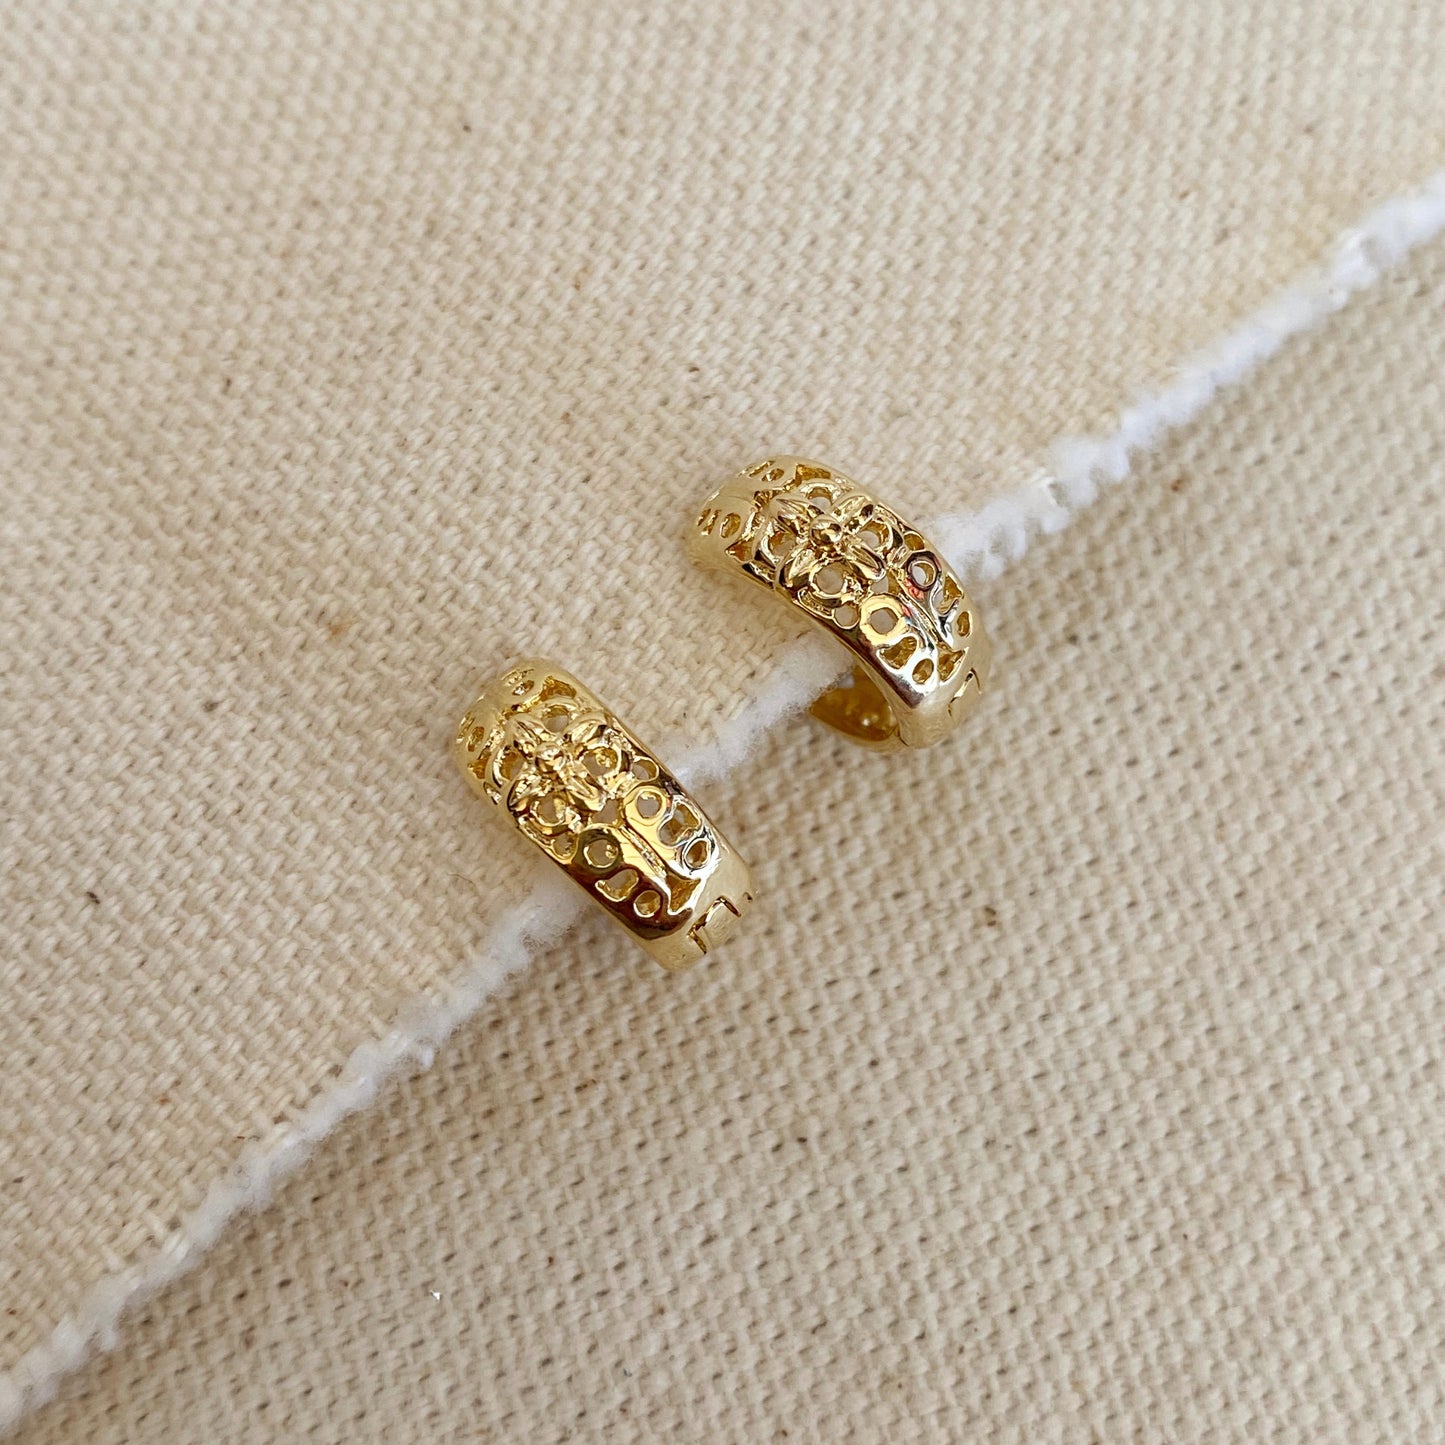 GoldFi 18k Gold Filled Vintage Flower Clicker Hoop Earrings